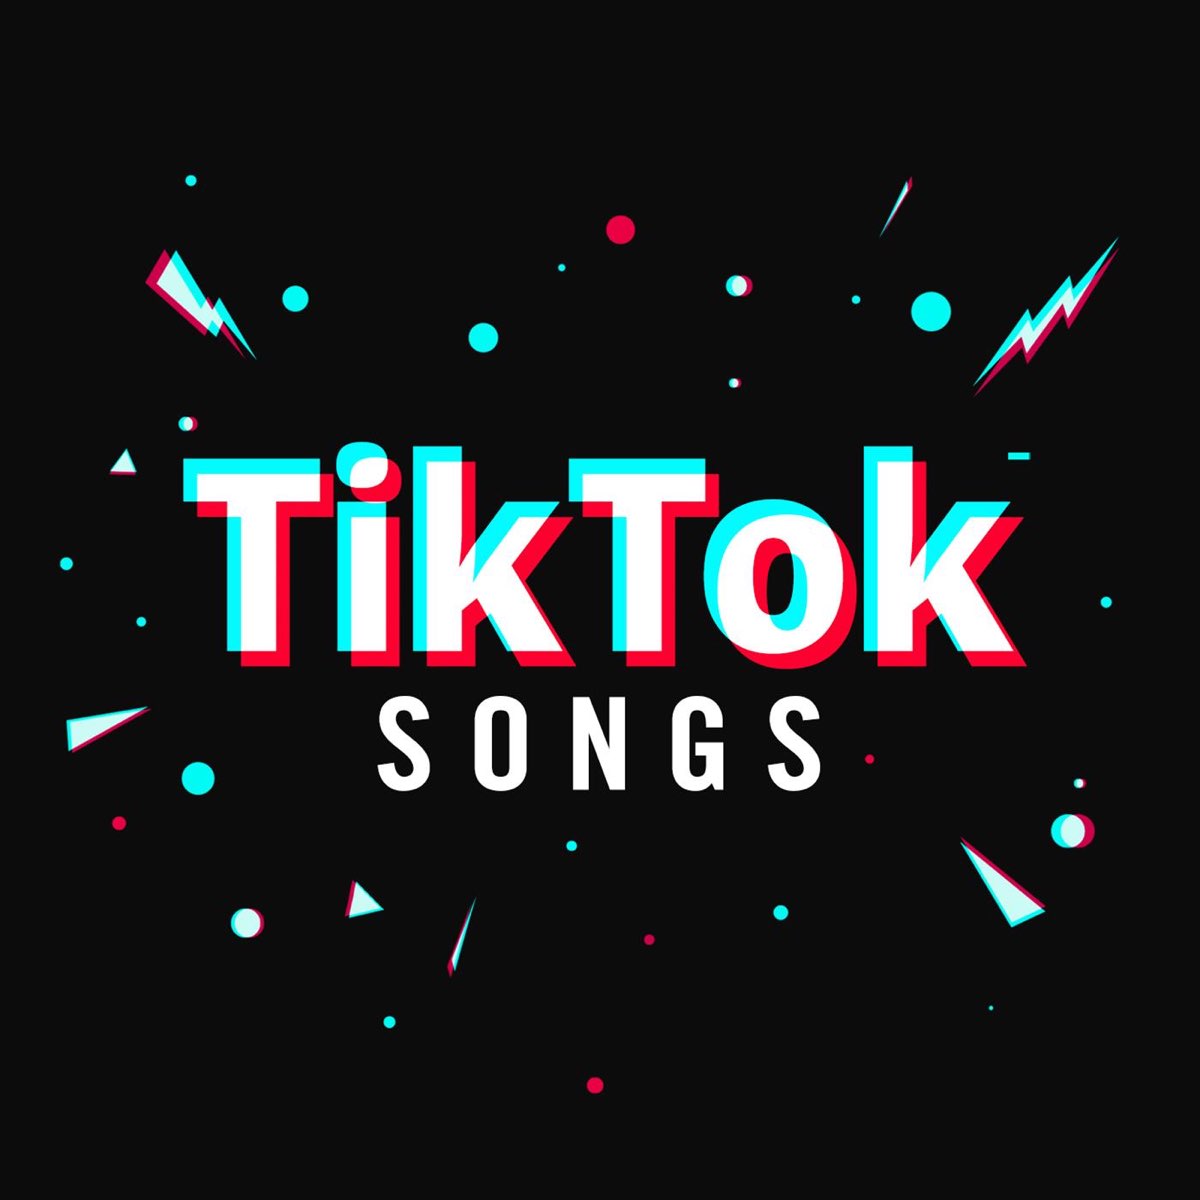 ‎TikTok Songs - Album by Various Artists - Apple Music